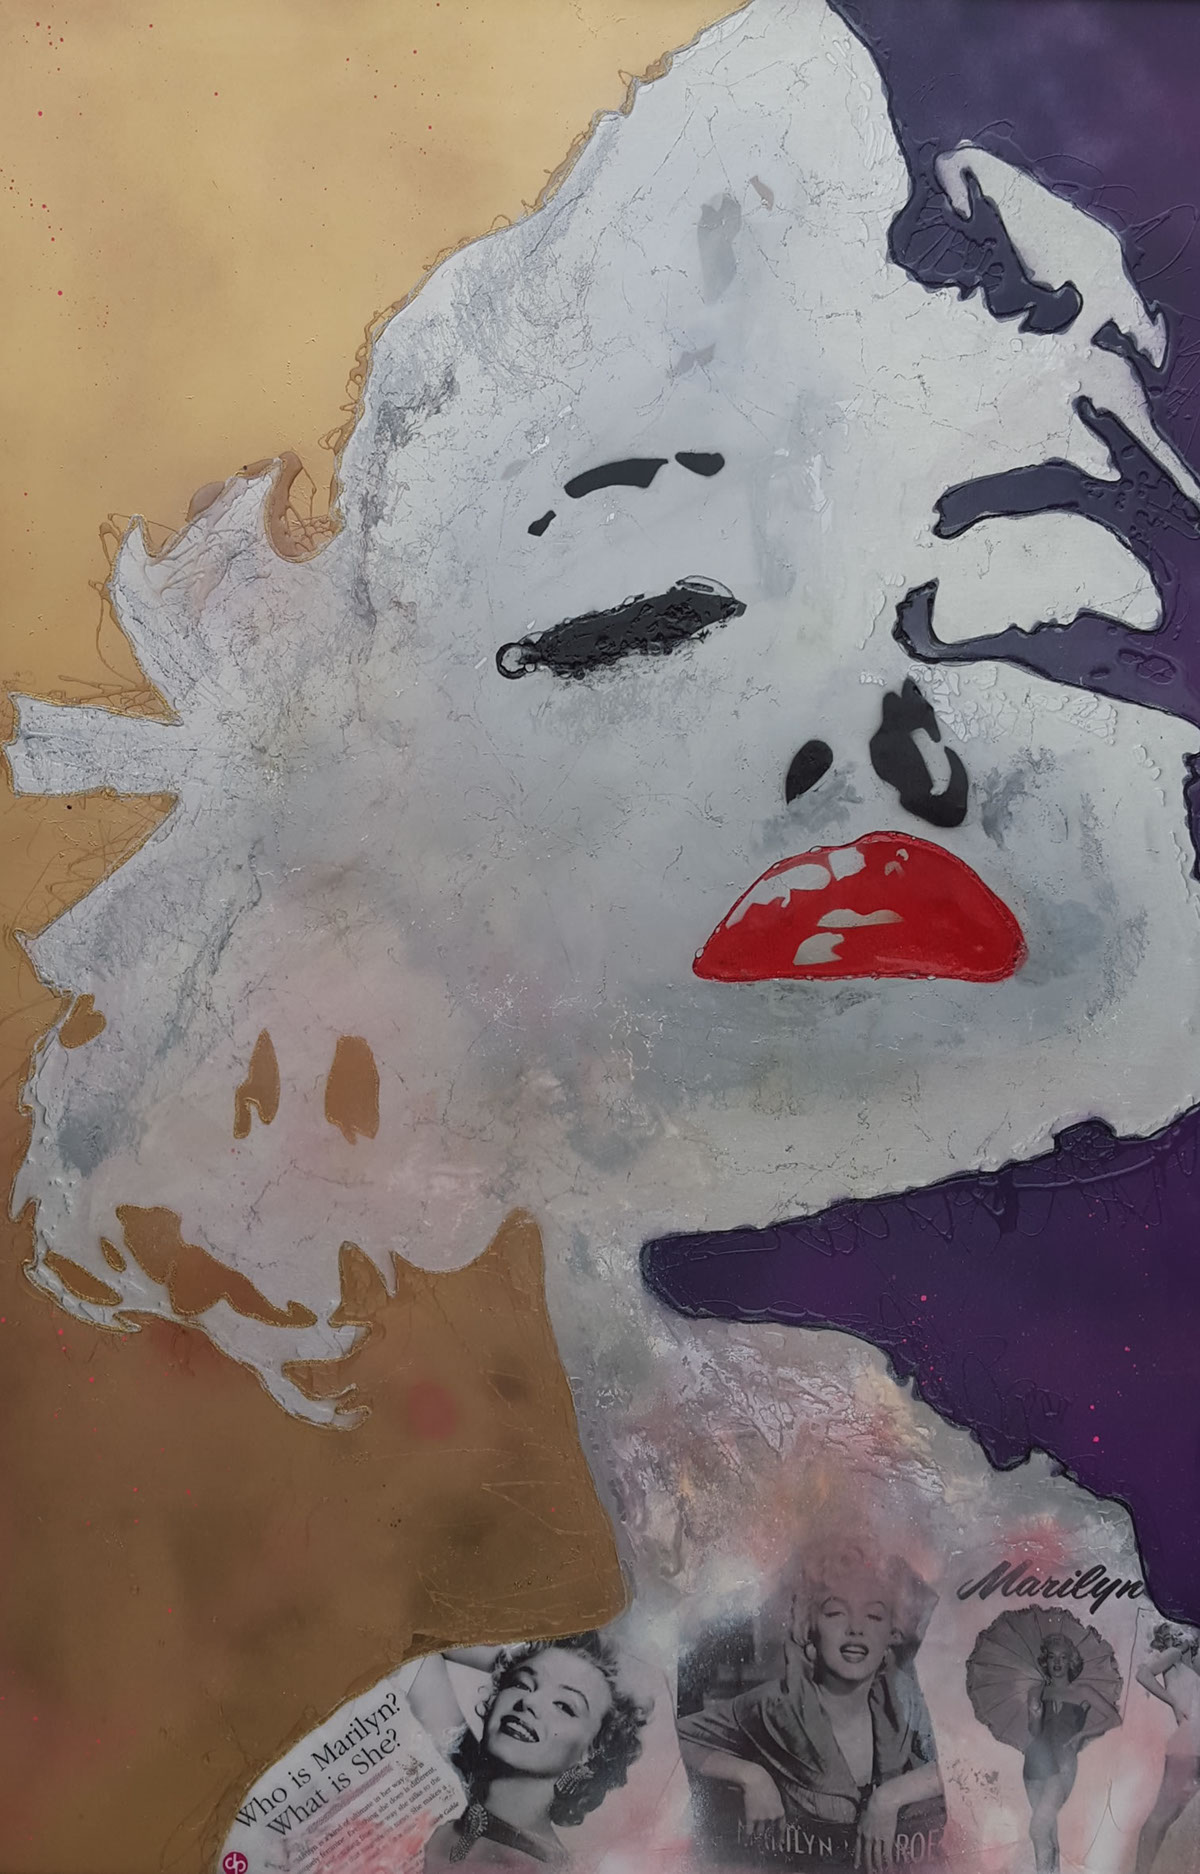 amy winehouse kate moss Jimi Hendrix Audrey Hepburn david bowie queen Marilyn Monroe spray paint Keith Richards twiggy urban art